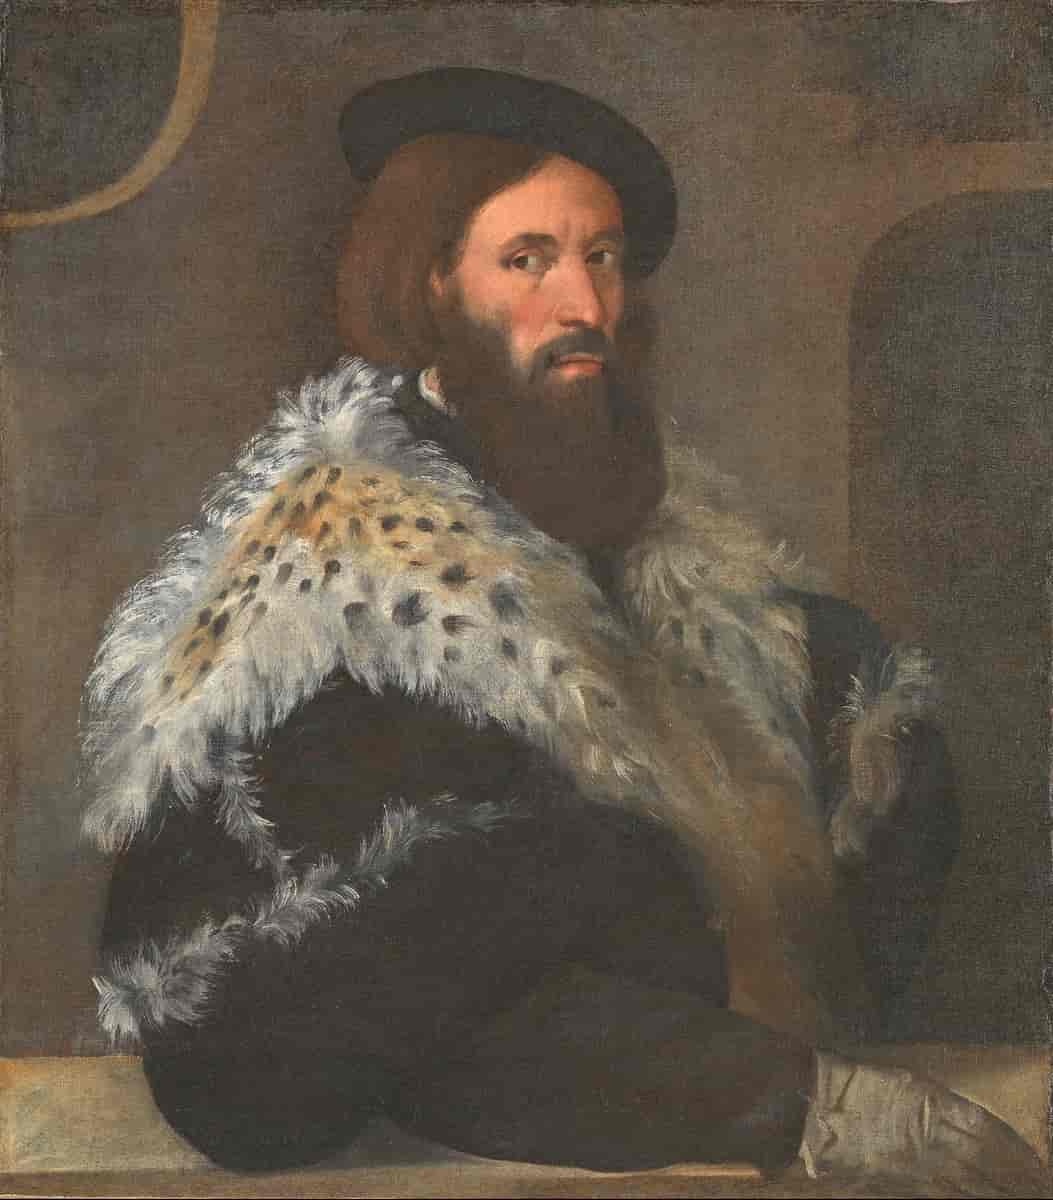 Girolamo Fracastoro